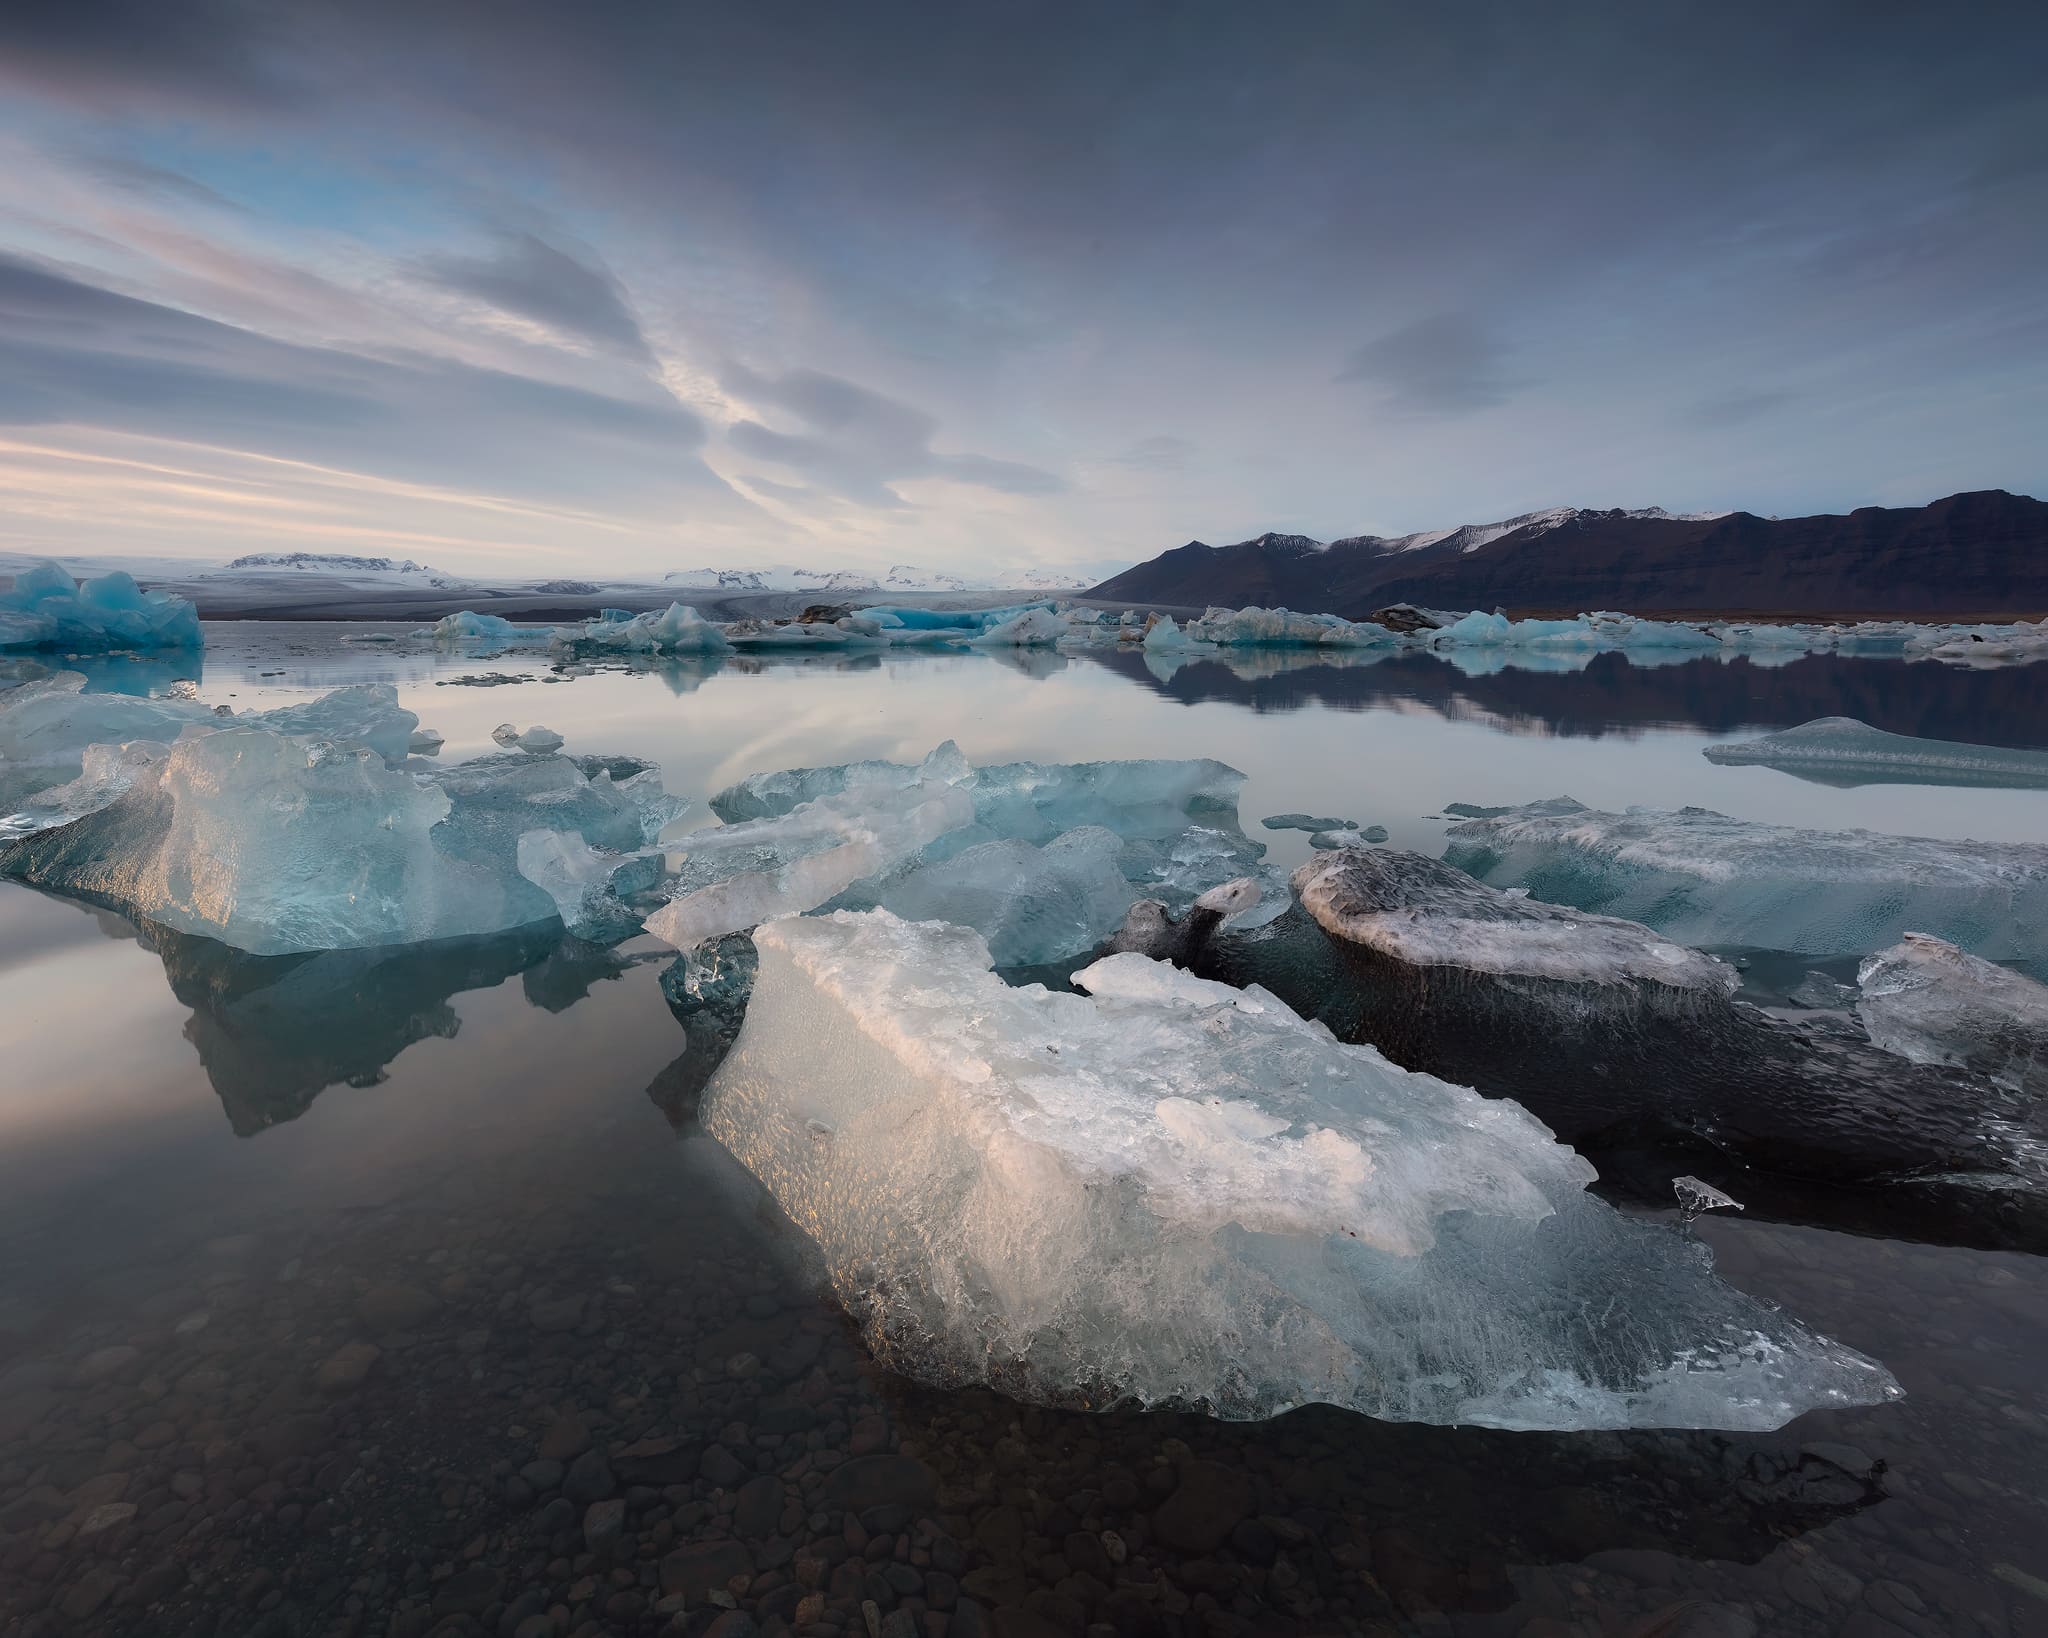 Fine art photograph of Jokulsarlon Glacier Lagoon in South Iceland by landscape photographer, Serena Dzenis.